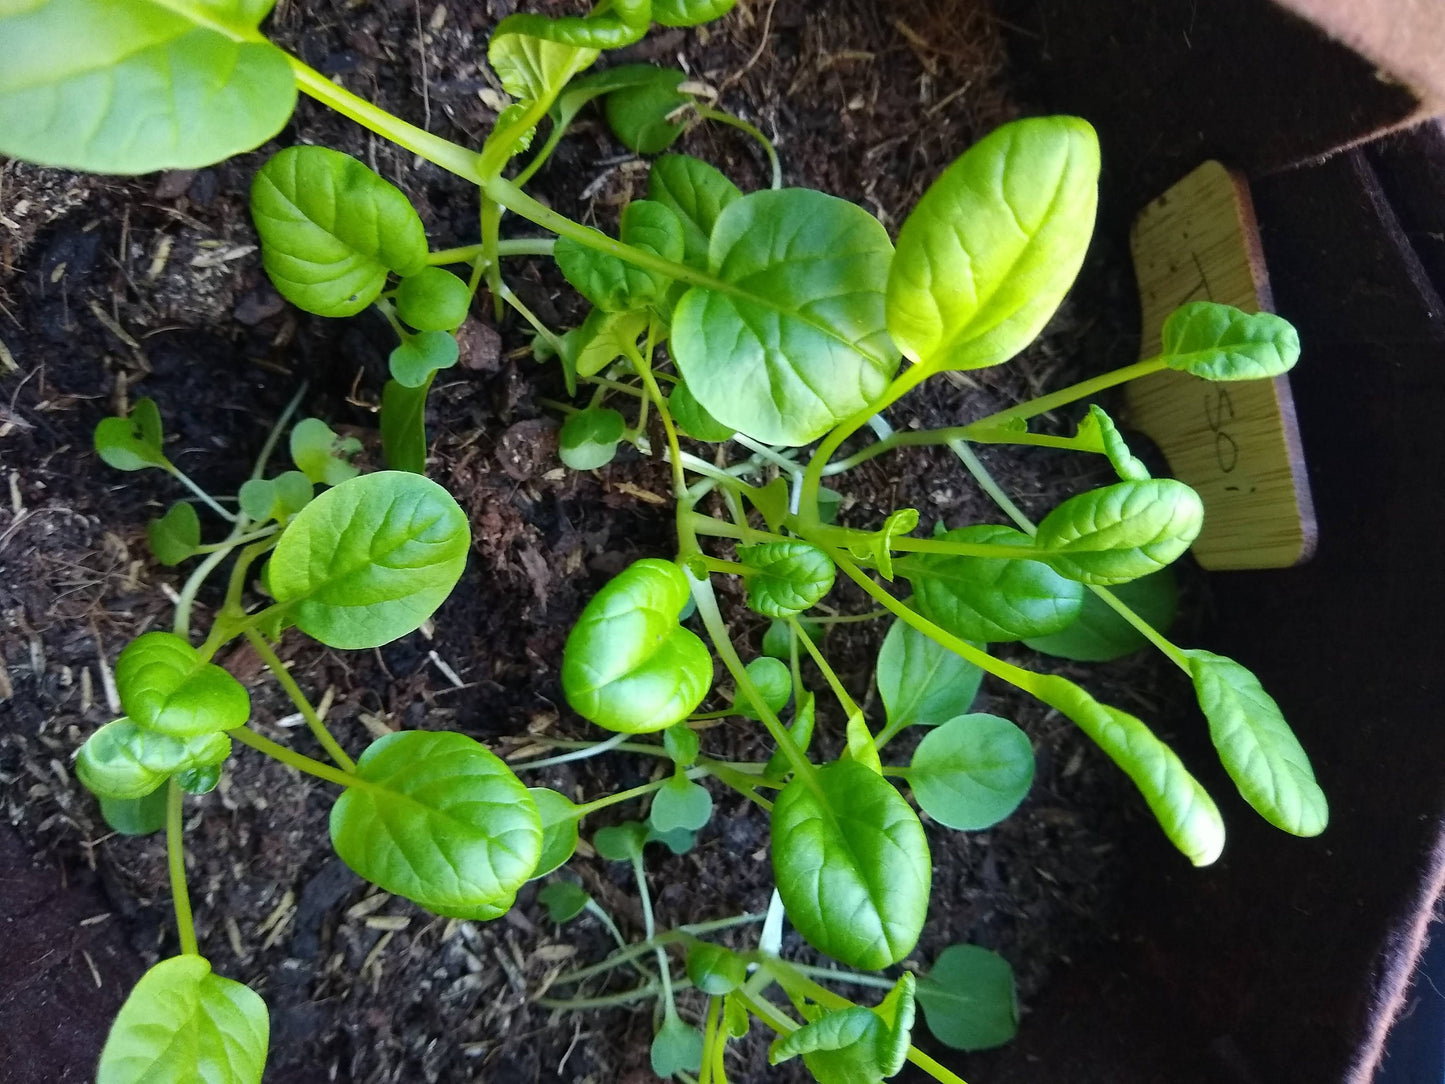 Organic Asian Tatsoi (Leafy Green) Garden Kit.